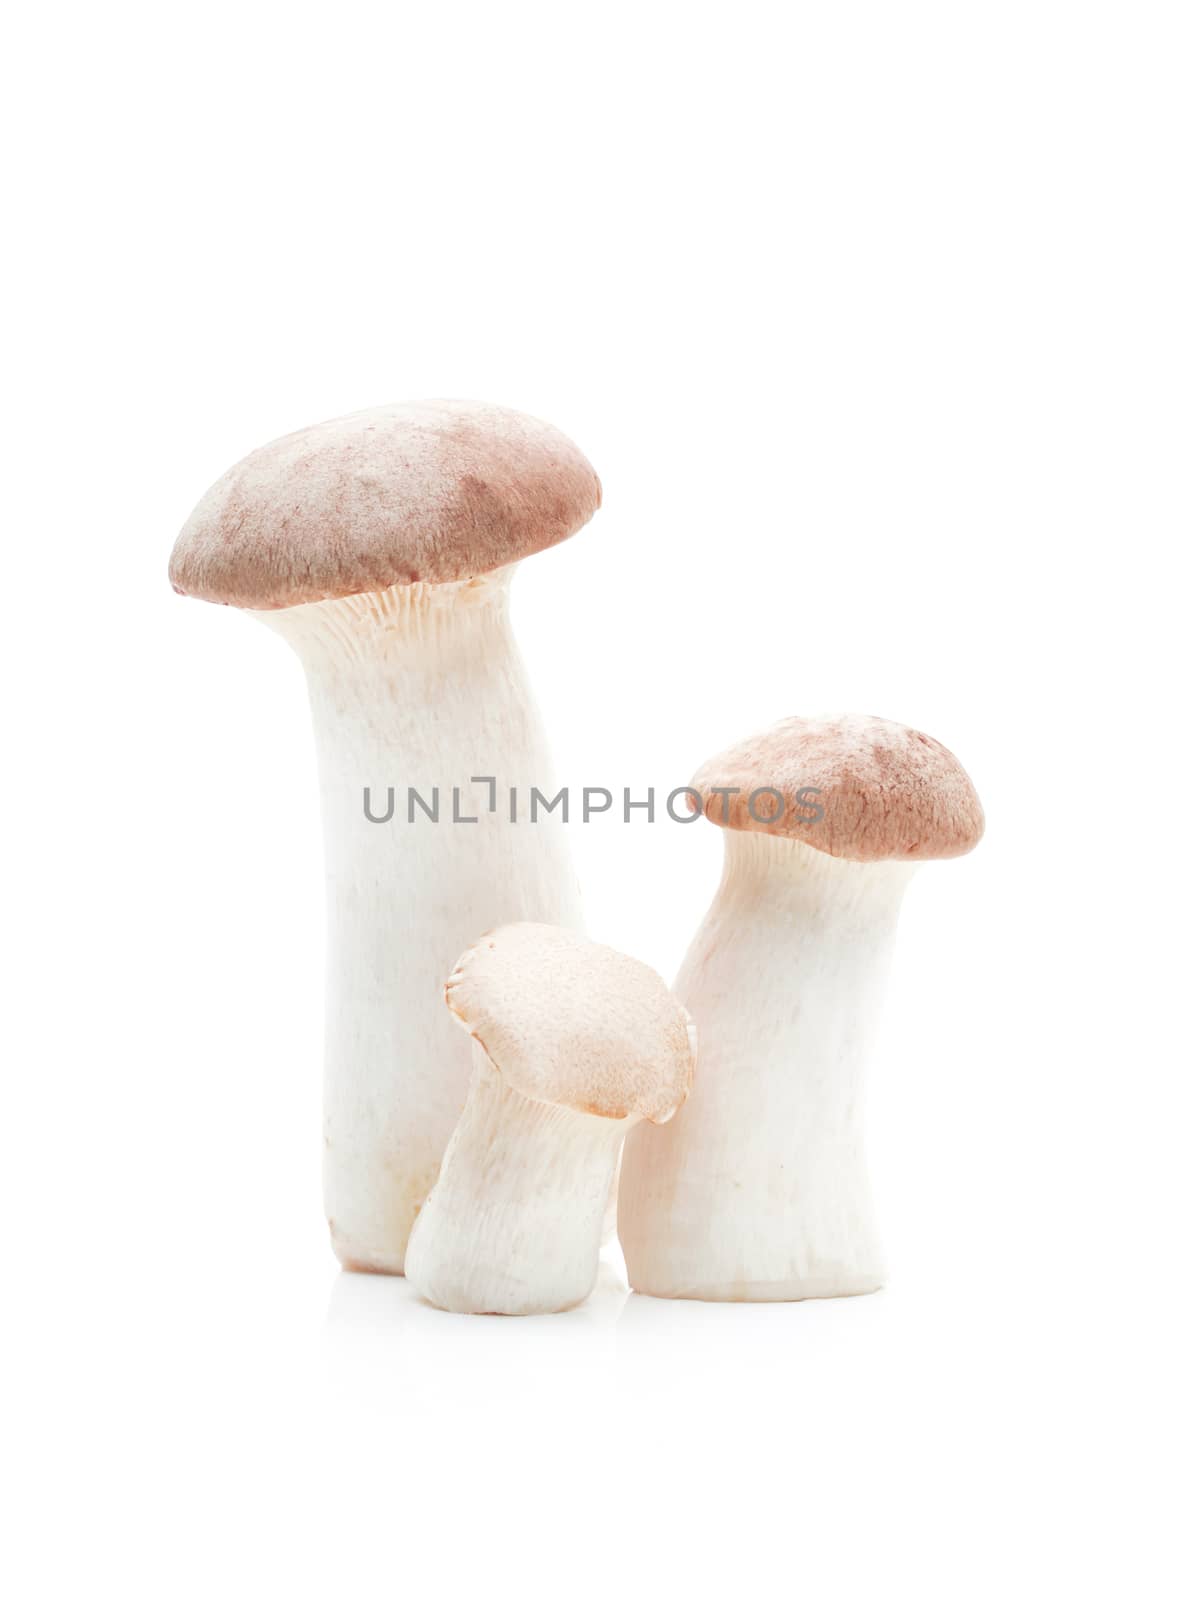 Mushroom on a white background